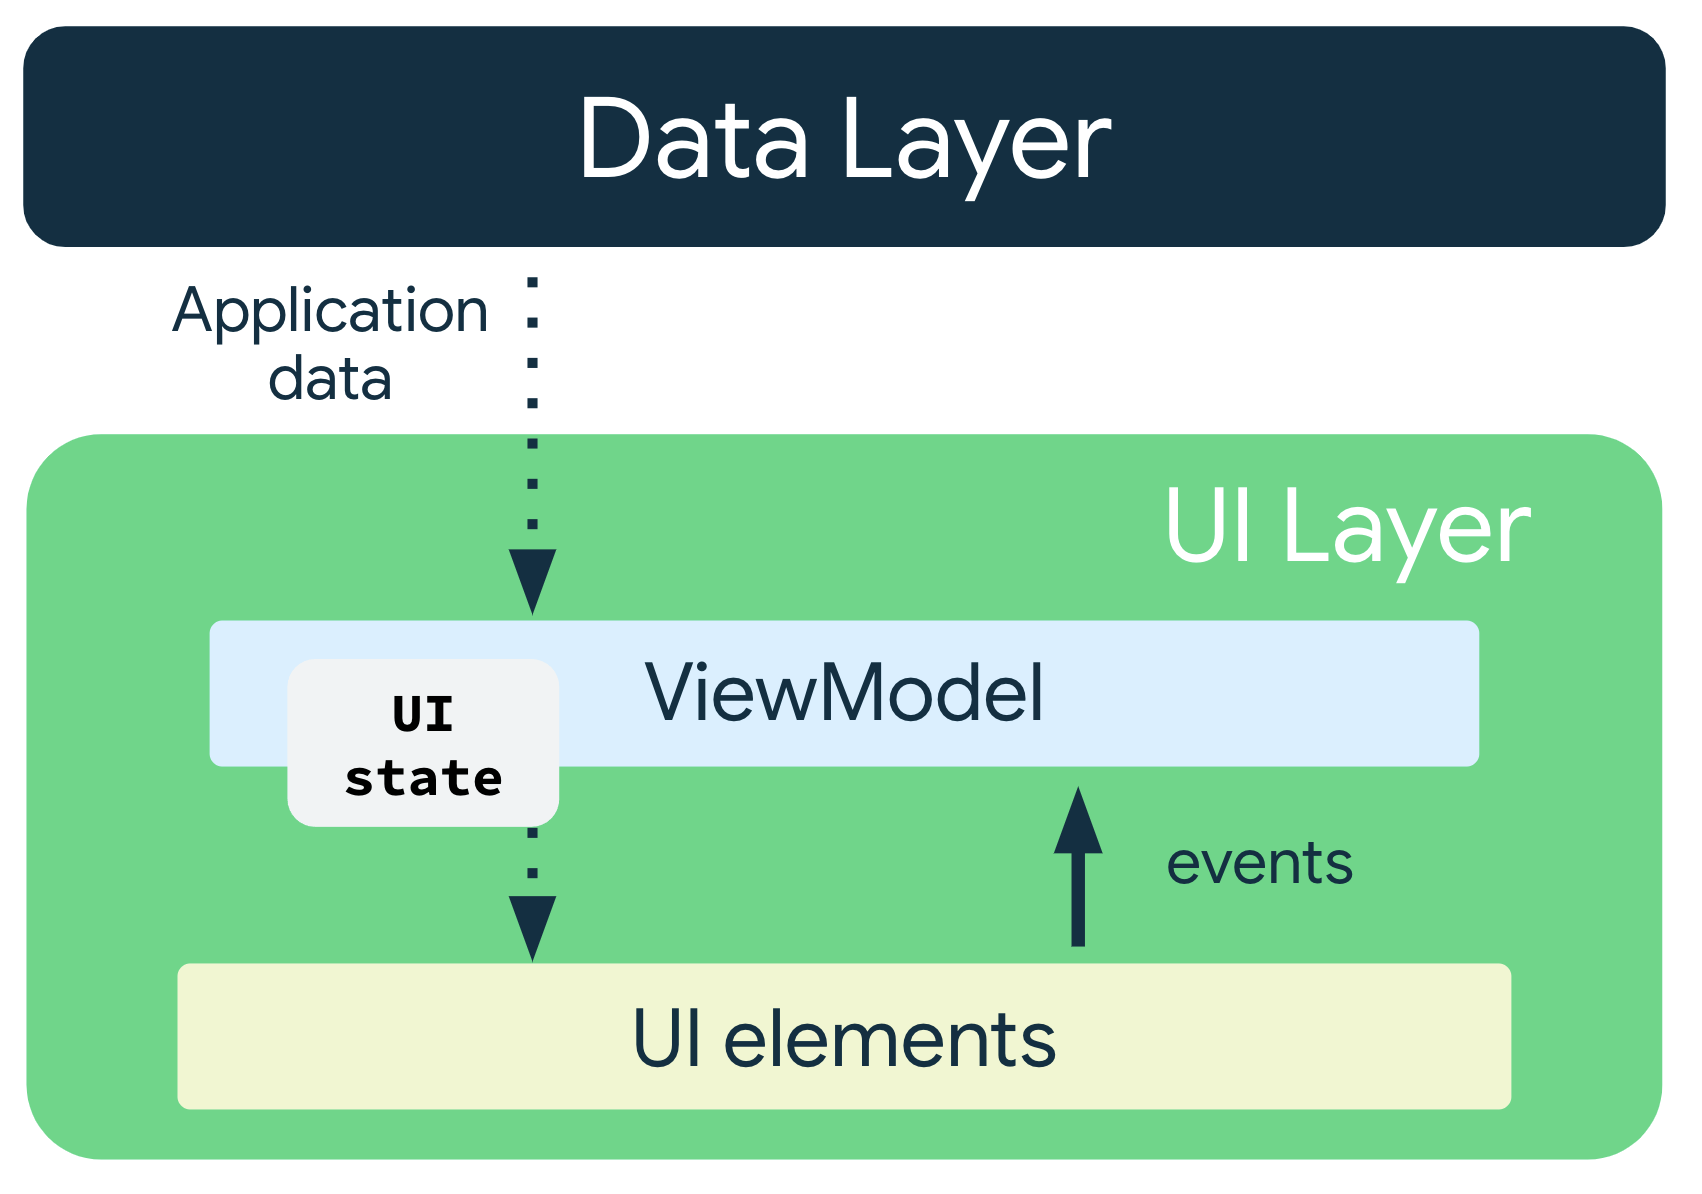 Data aplikasi mengalir dari lapisan data ke ViewModel. Status UI
    mengalir dari ViewModel ke elemen UI, dan peristiwa mengalir dari elemen
UI kembali ke ViewModel.